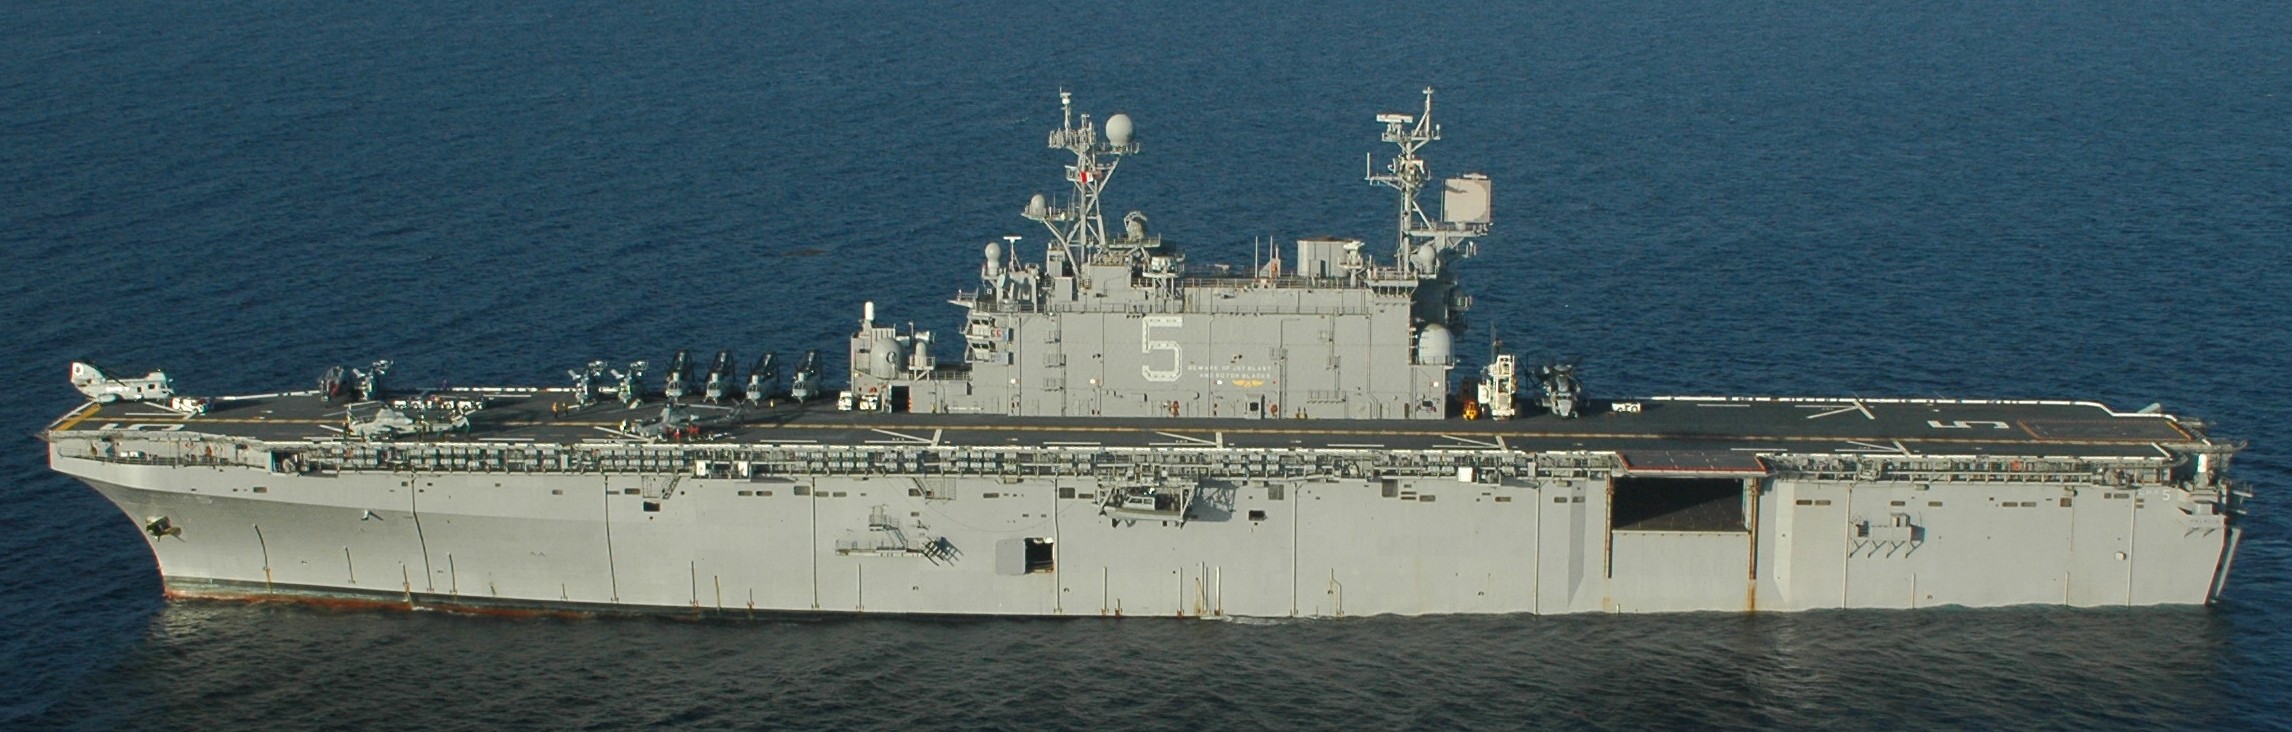 lha-5 uss peleliu tarawa class amphibious assault ship landing helicopter us navy exercise iron fist 66